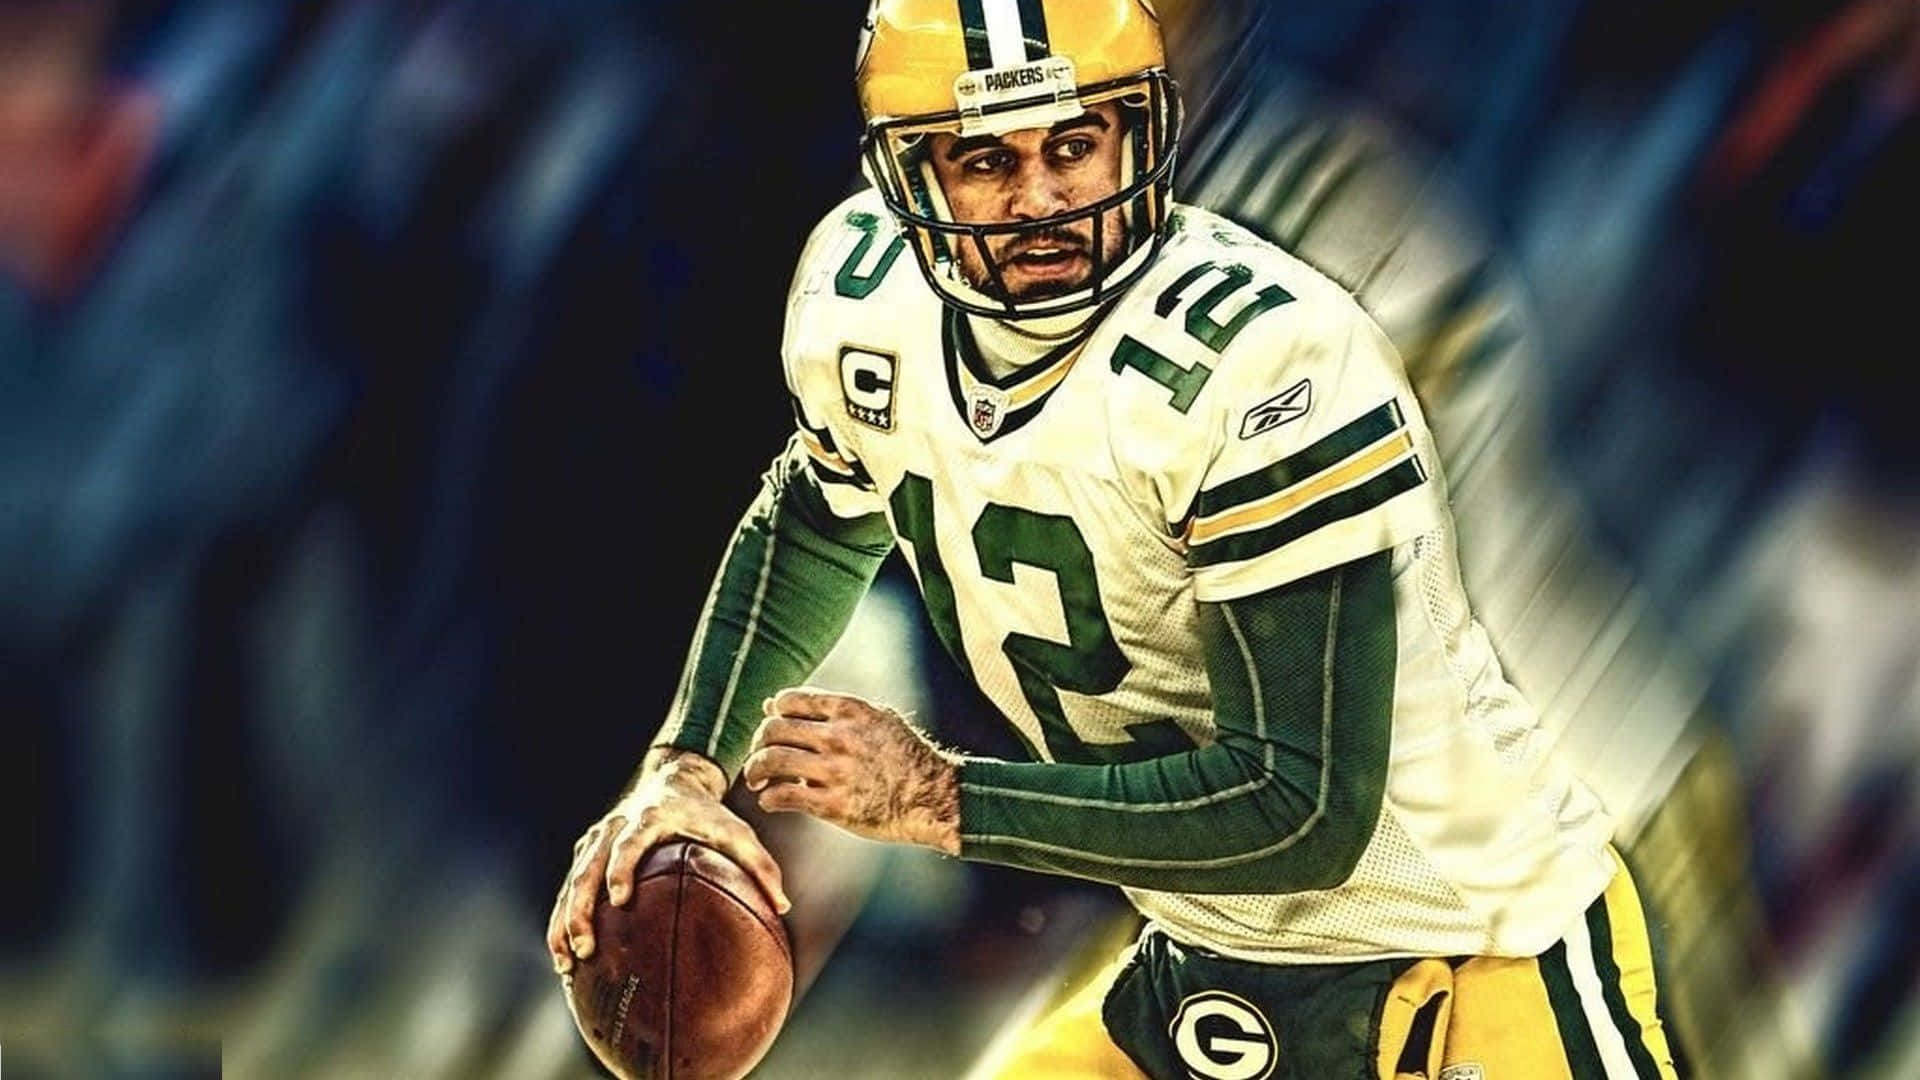 Aaronrodgers - Legendarisk Kvarterback For Green Bay Packers